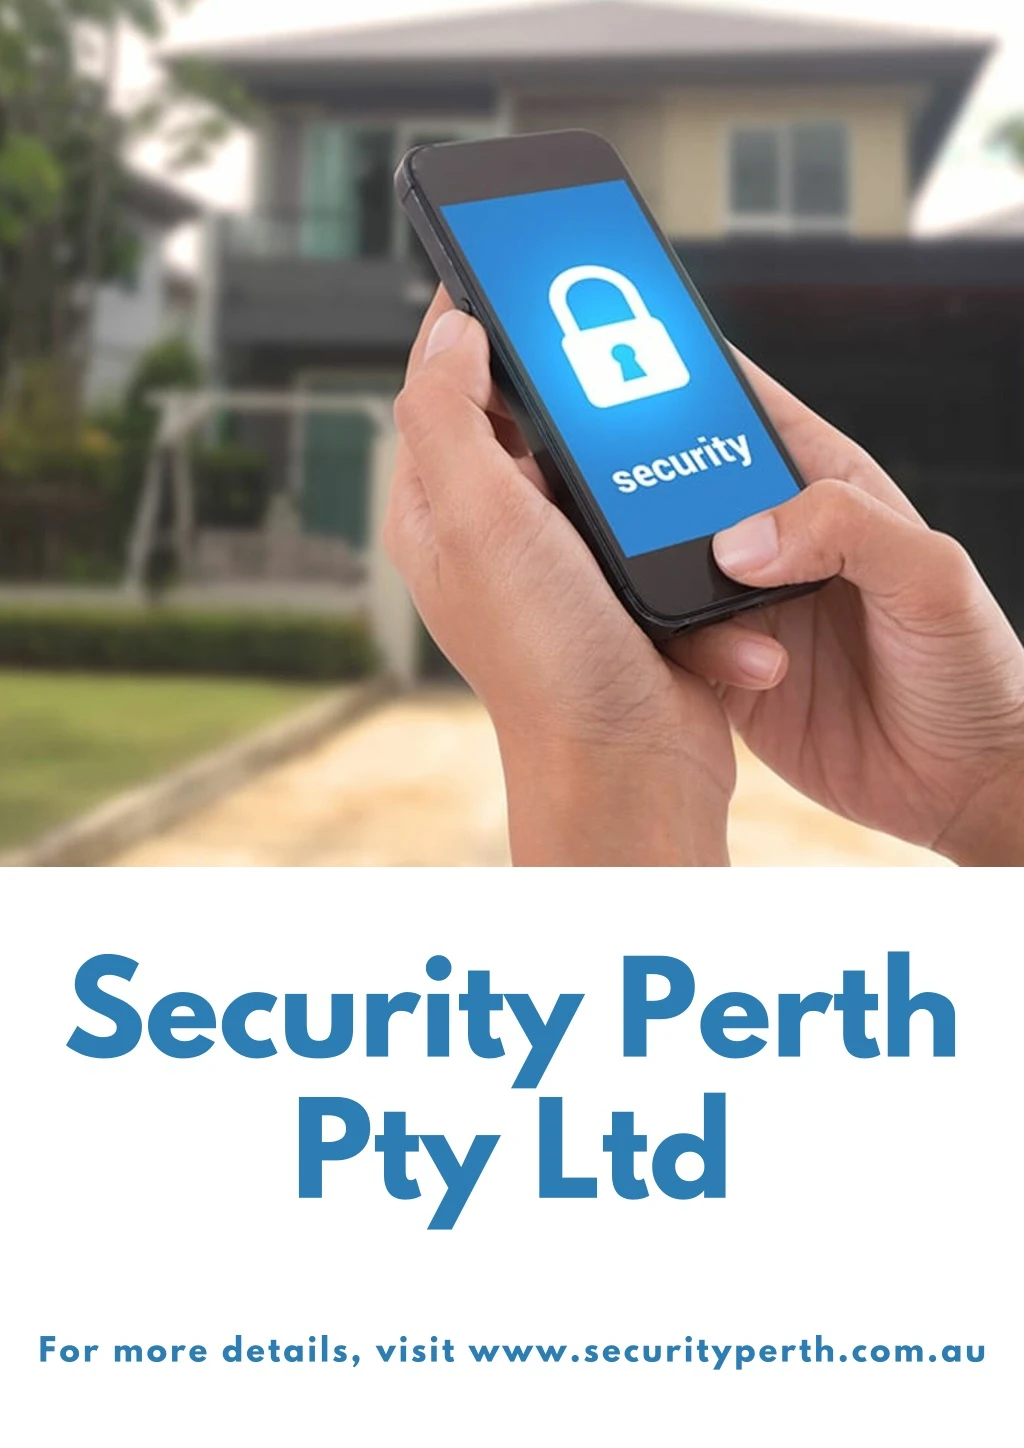 security perth pty ltd